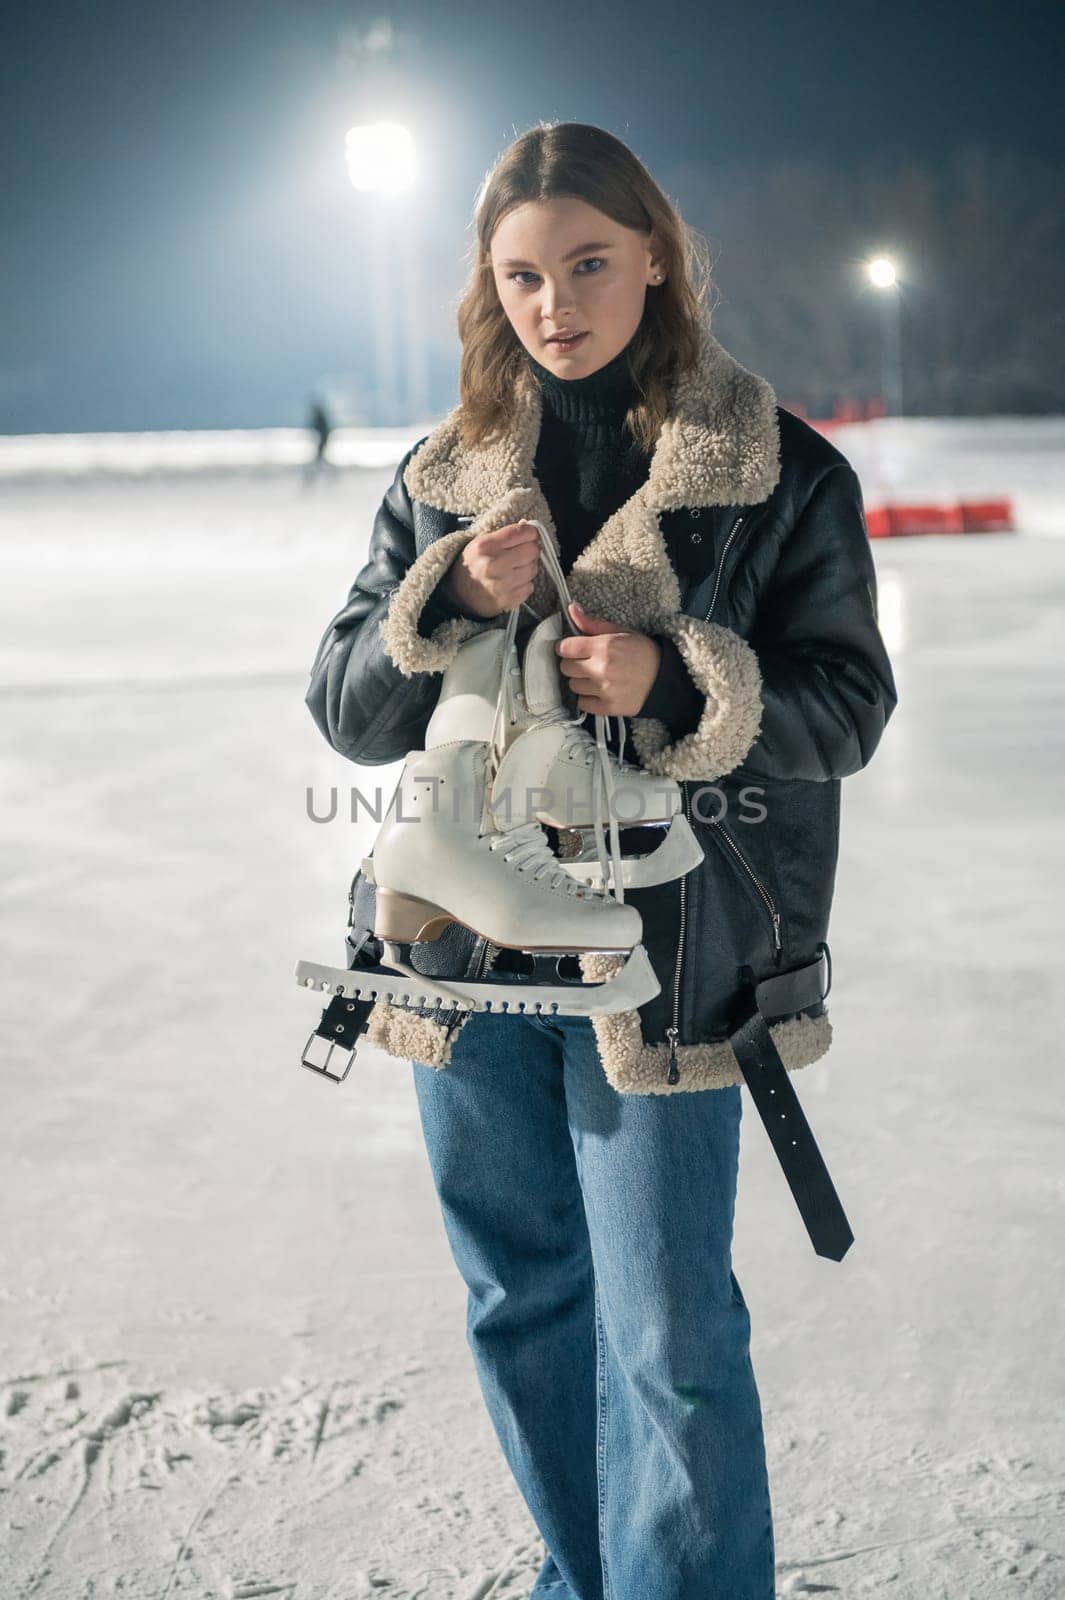 Beautiful young woman ice skating by rusak